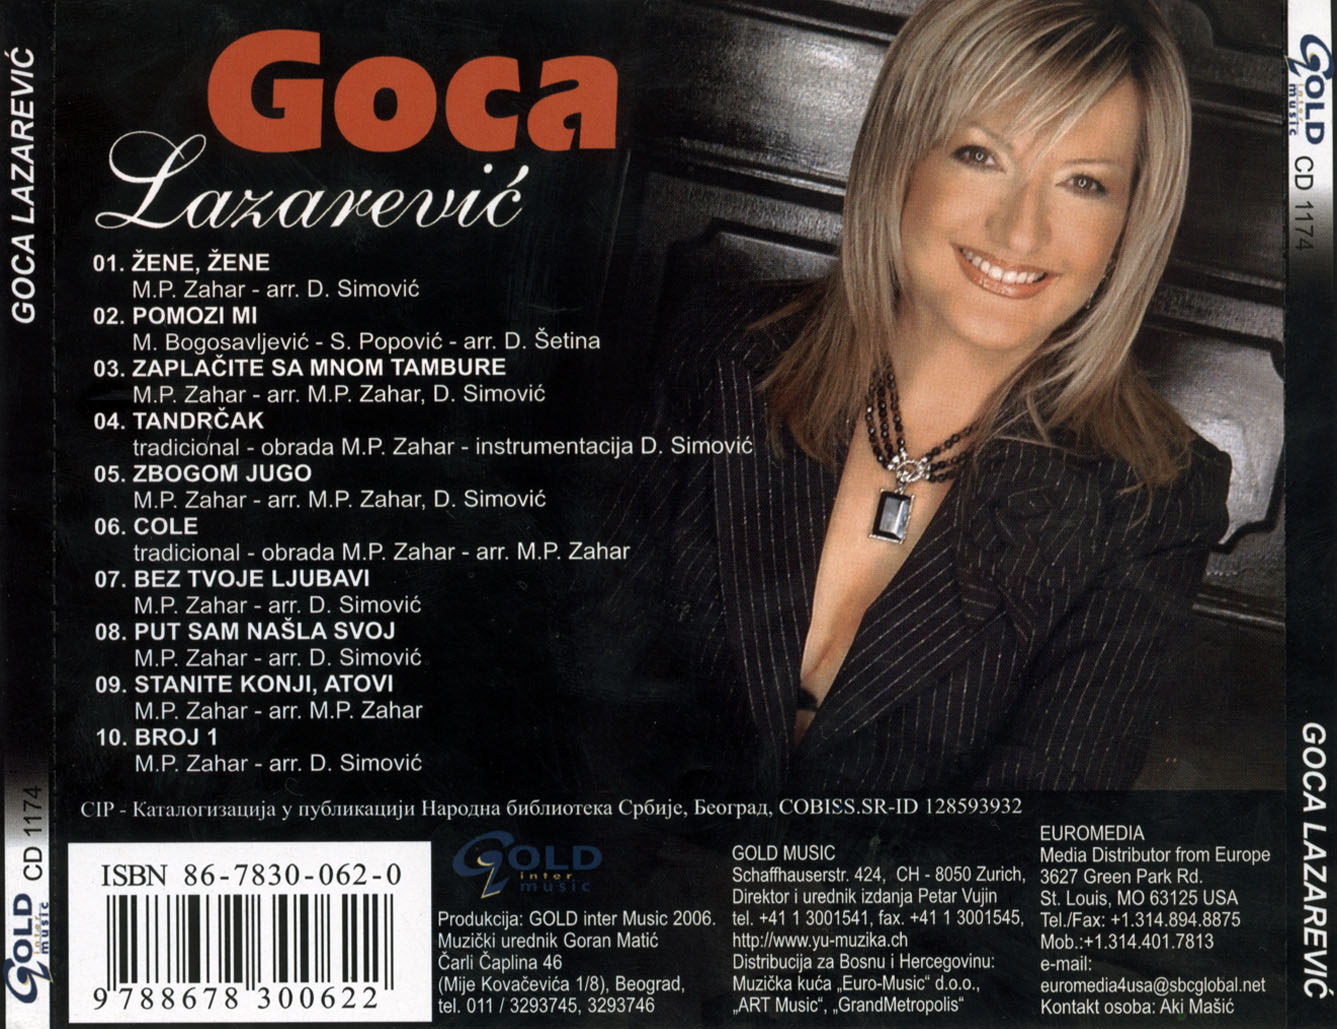 Goca Lazarevic 2006 Zadnja